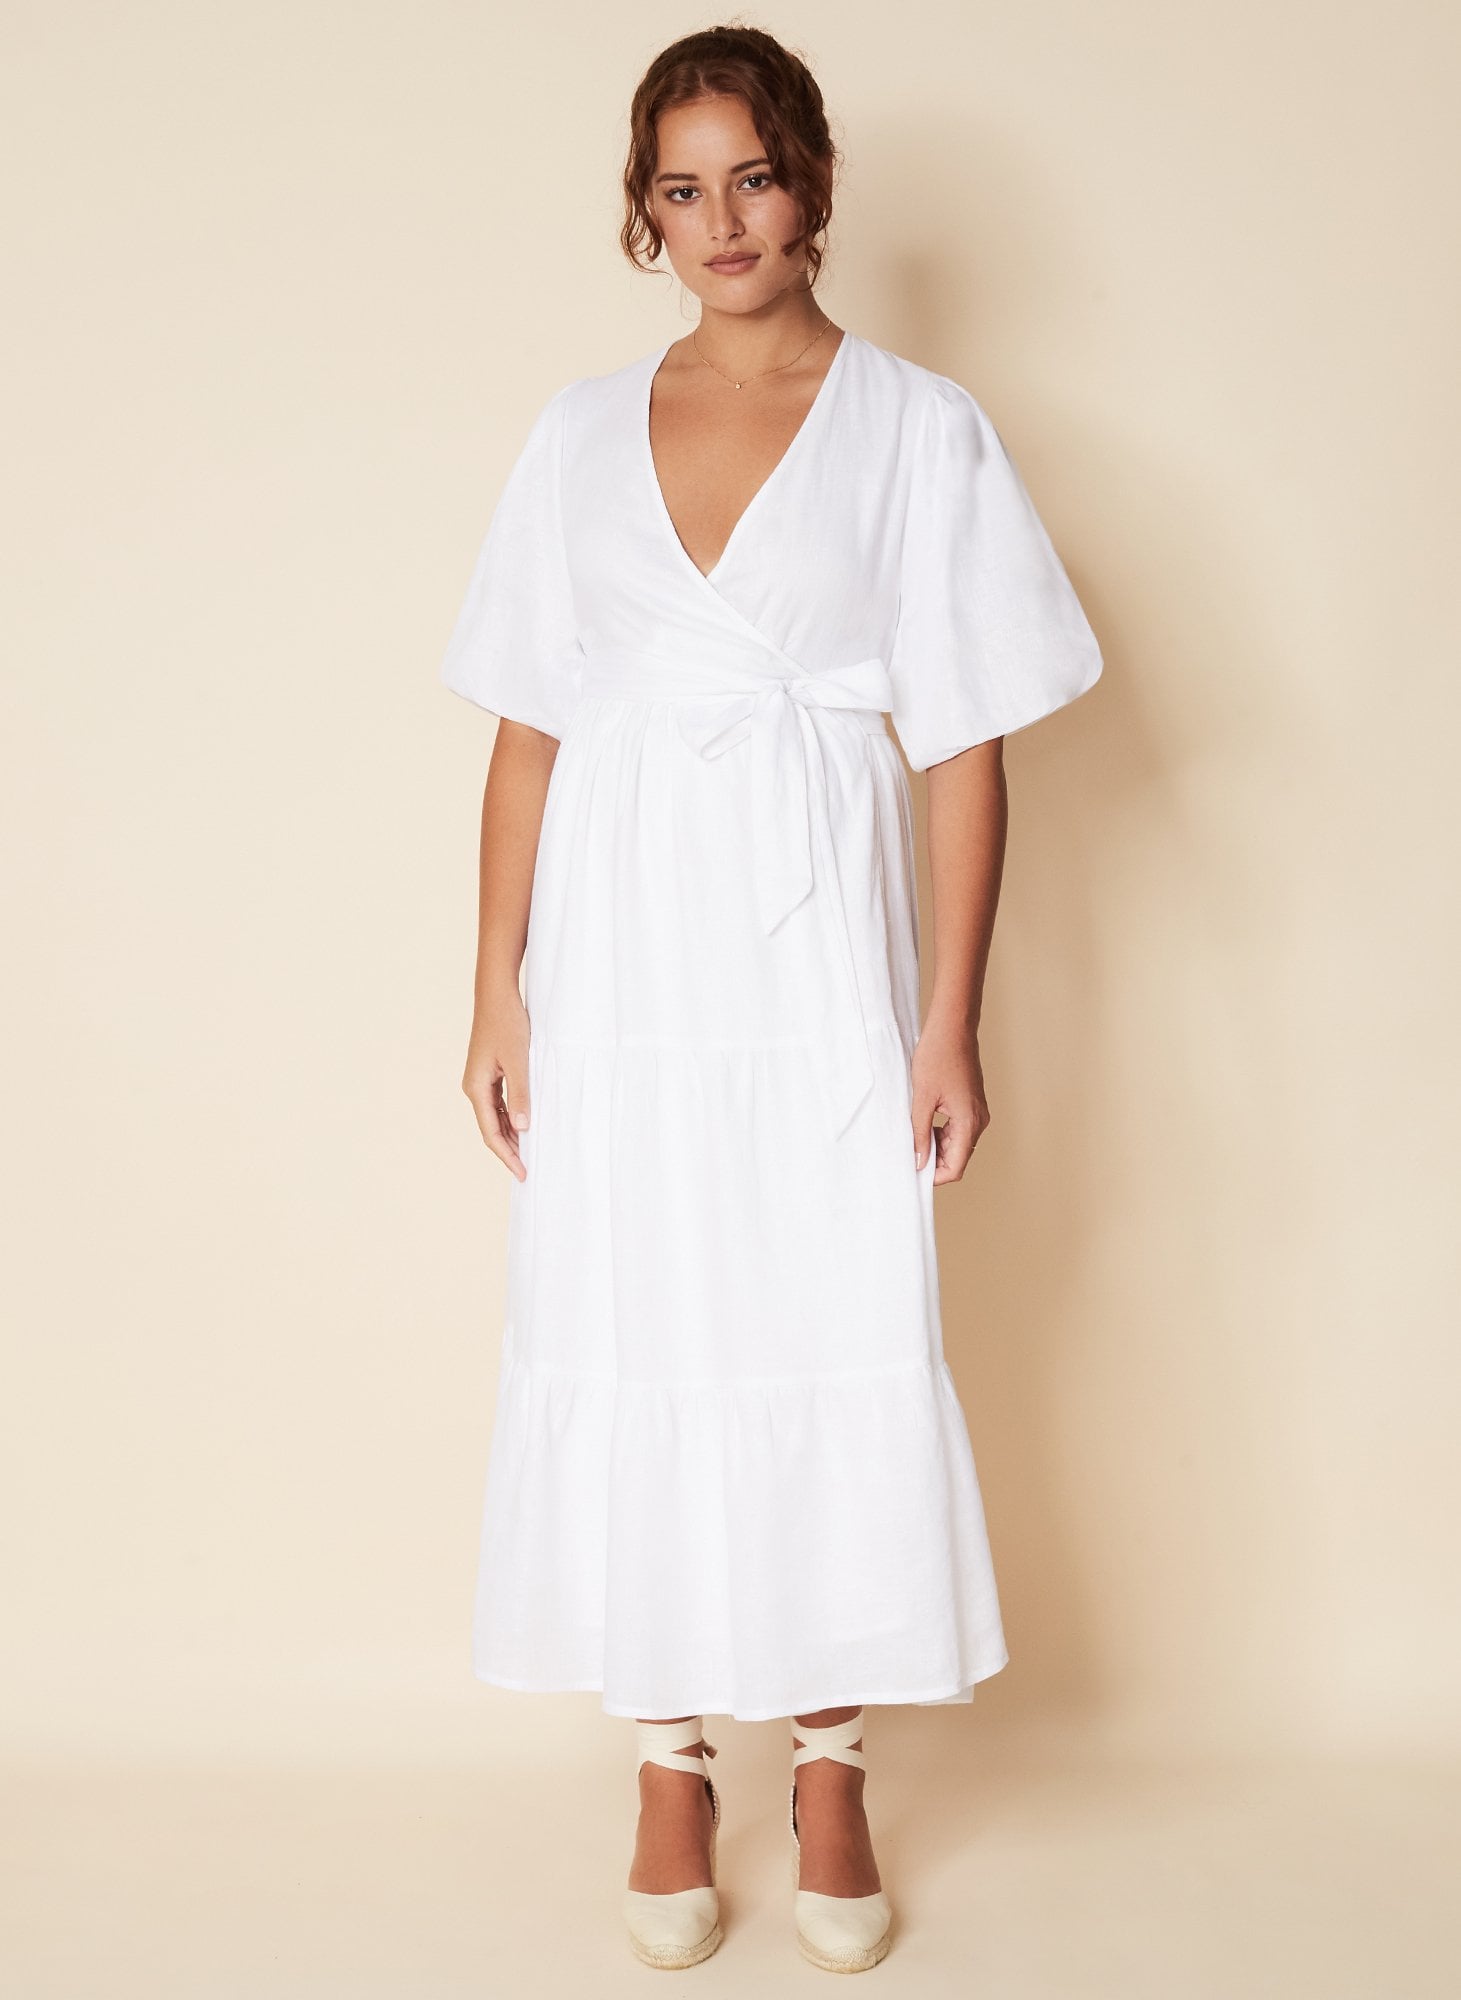 Edee Wrap Dress Plain White ...